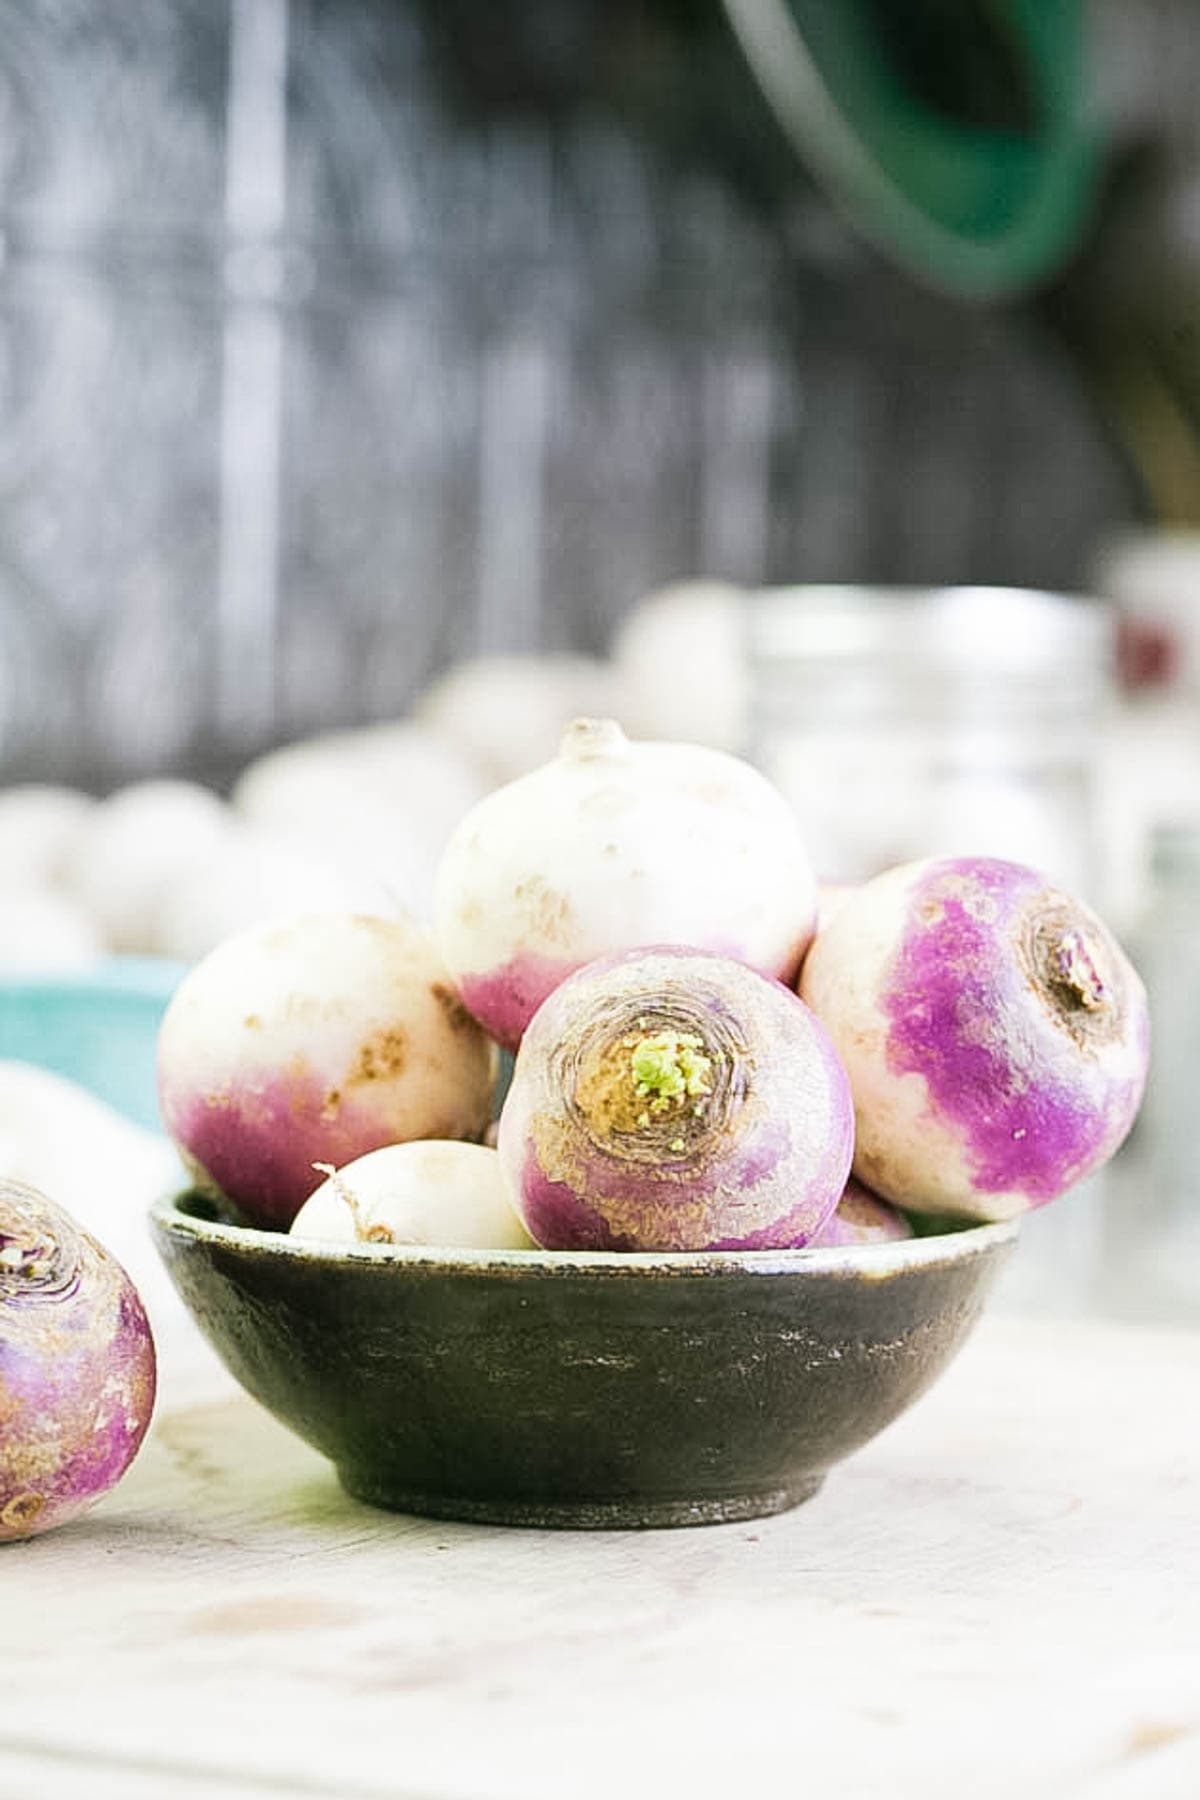 A bowl of fresh turnips.